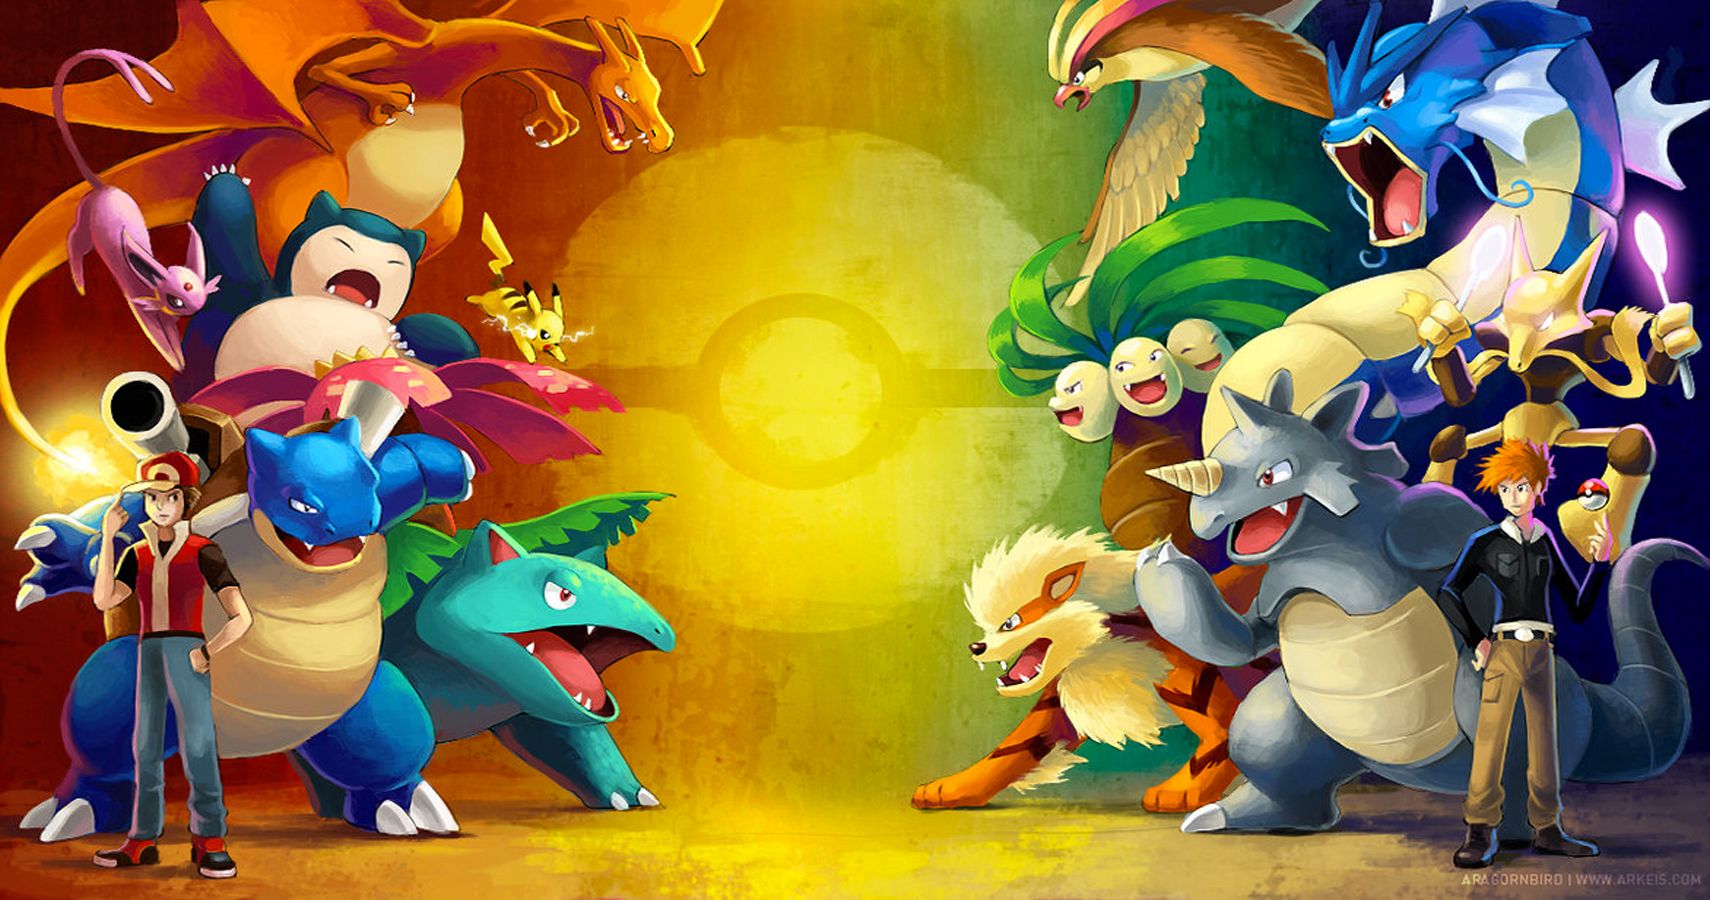 Pokémon GO Online Multiplayer Coming Next Year 